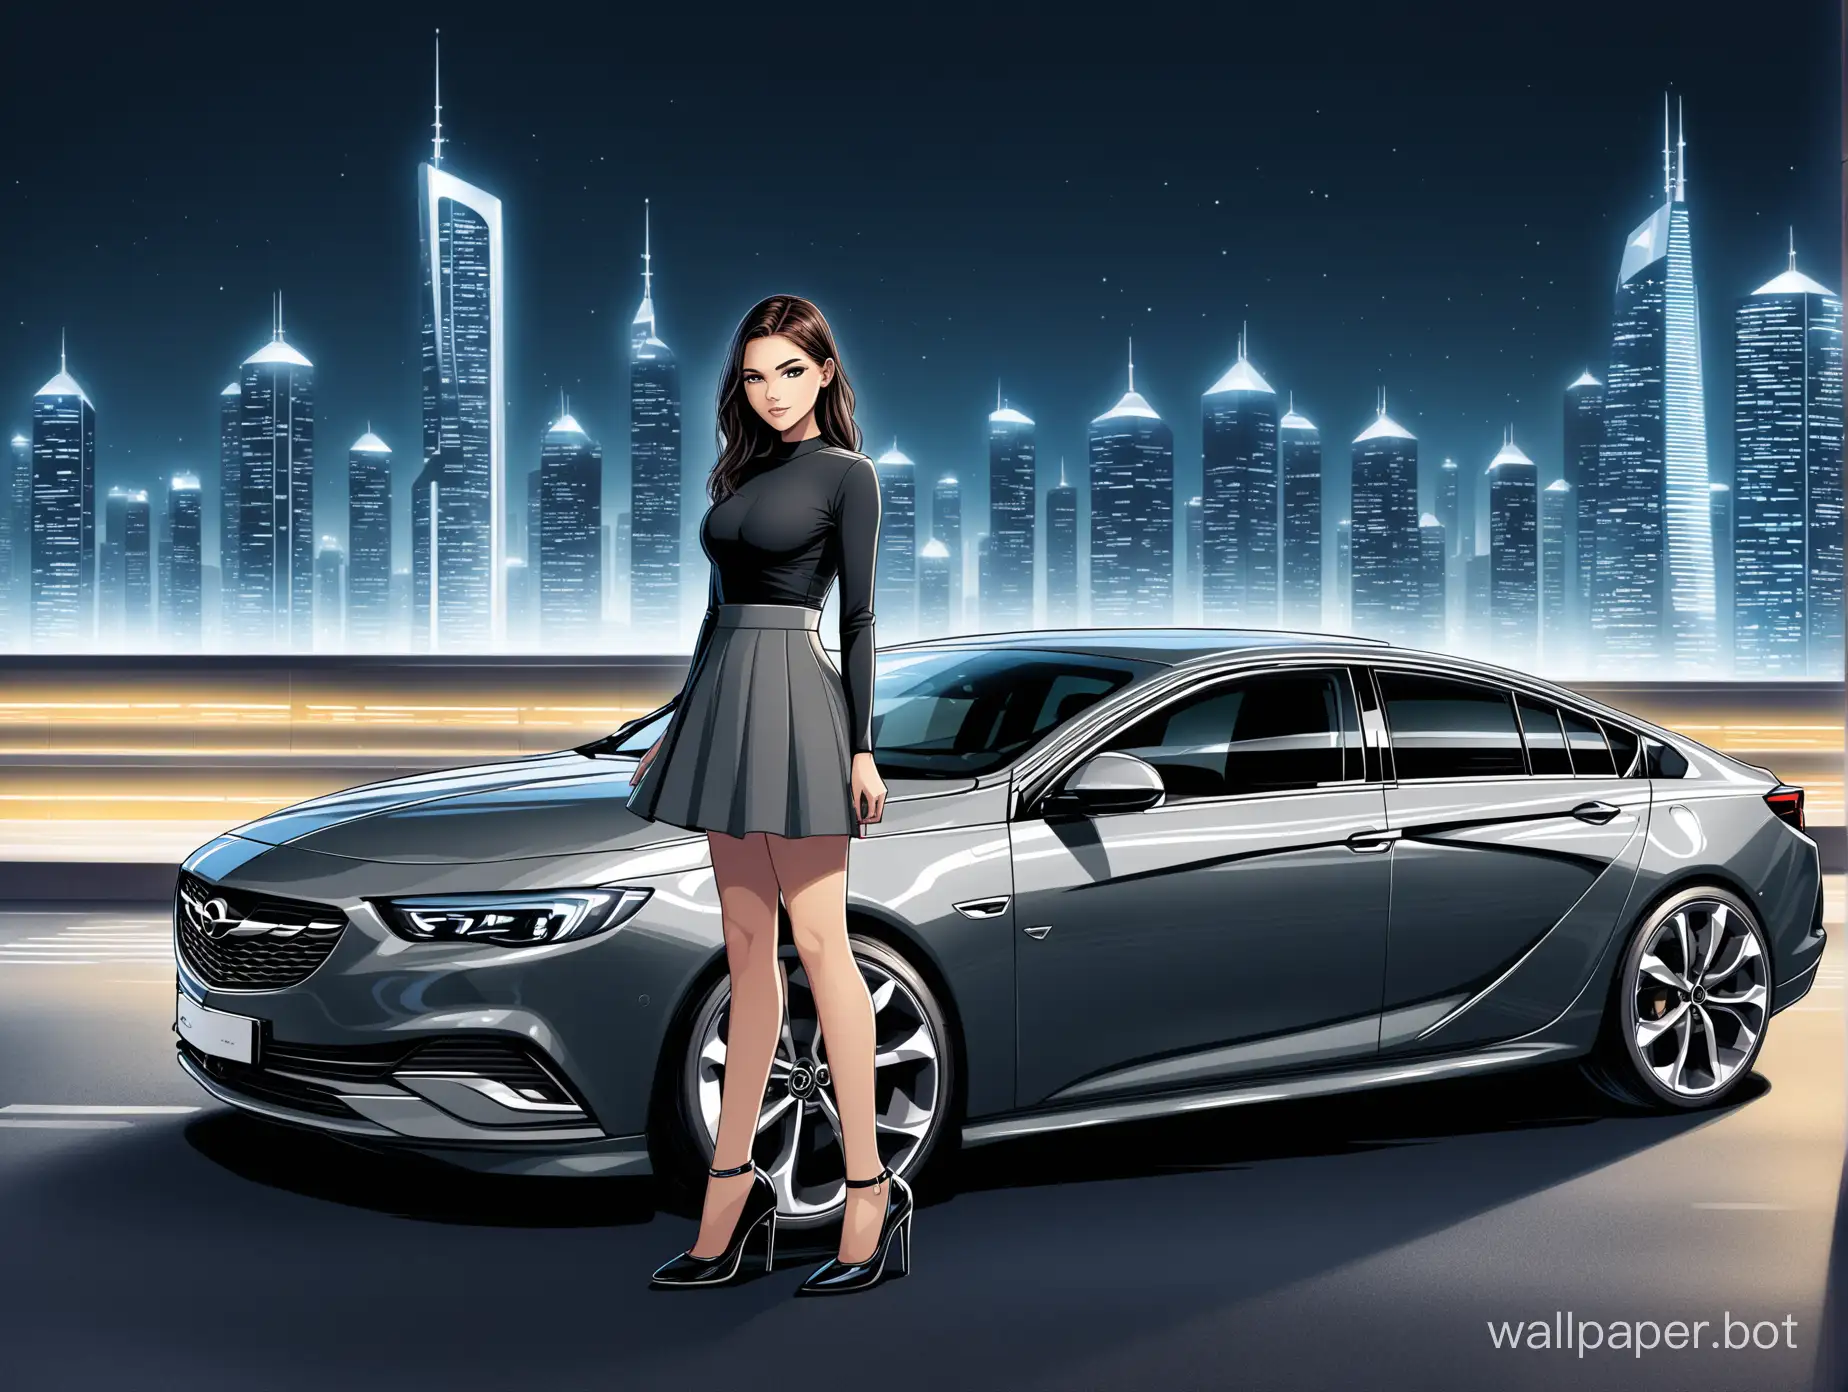 Brunette-Woman-Posing-with-Opel-Insignia-Grand-Sport-Car-in-Futuristic-Cityscape